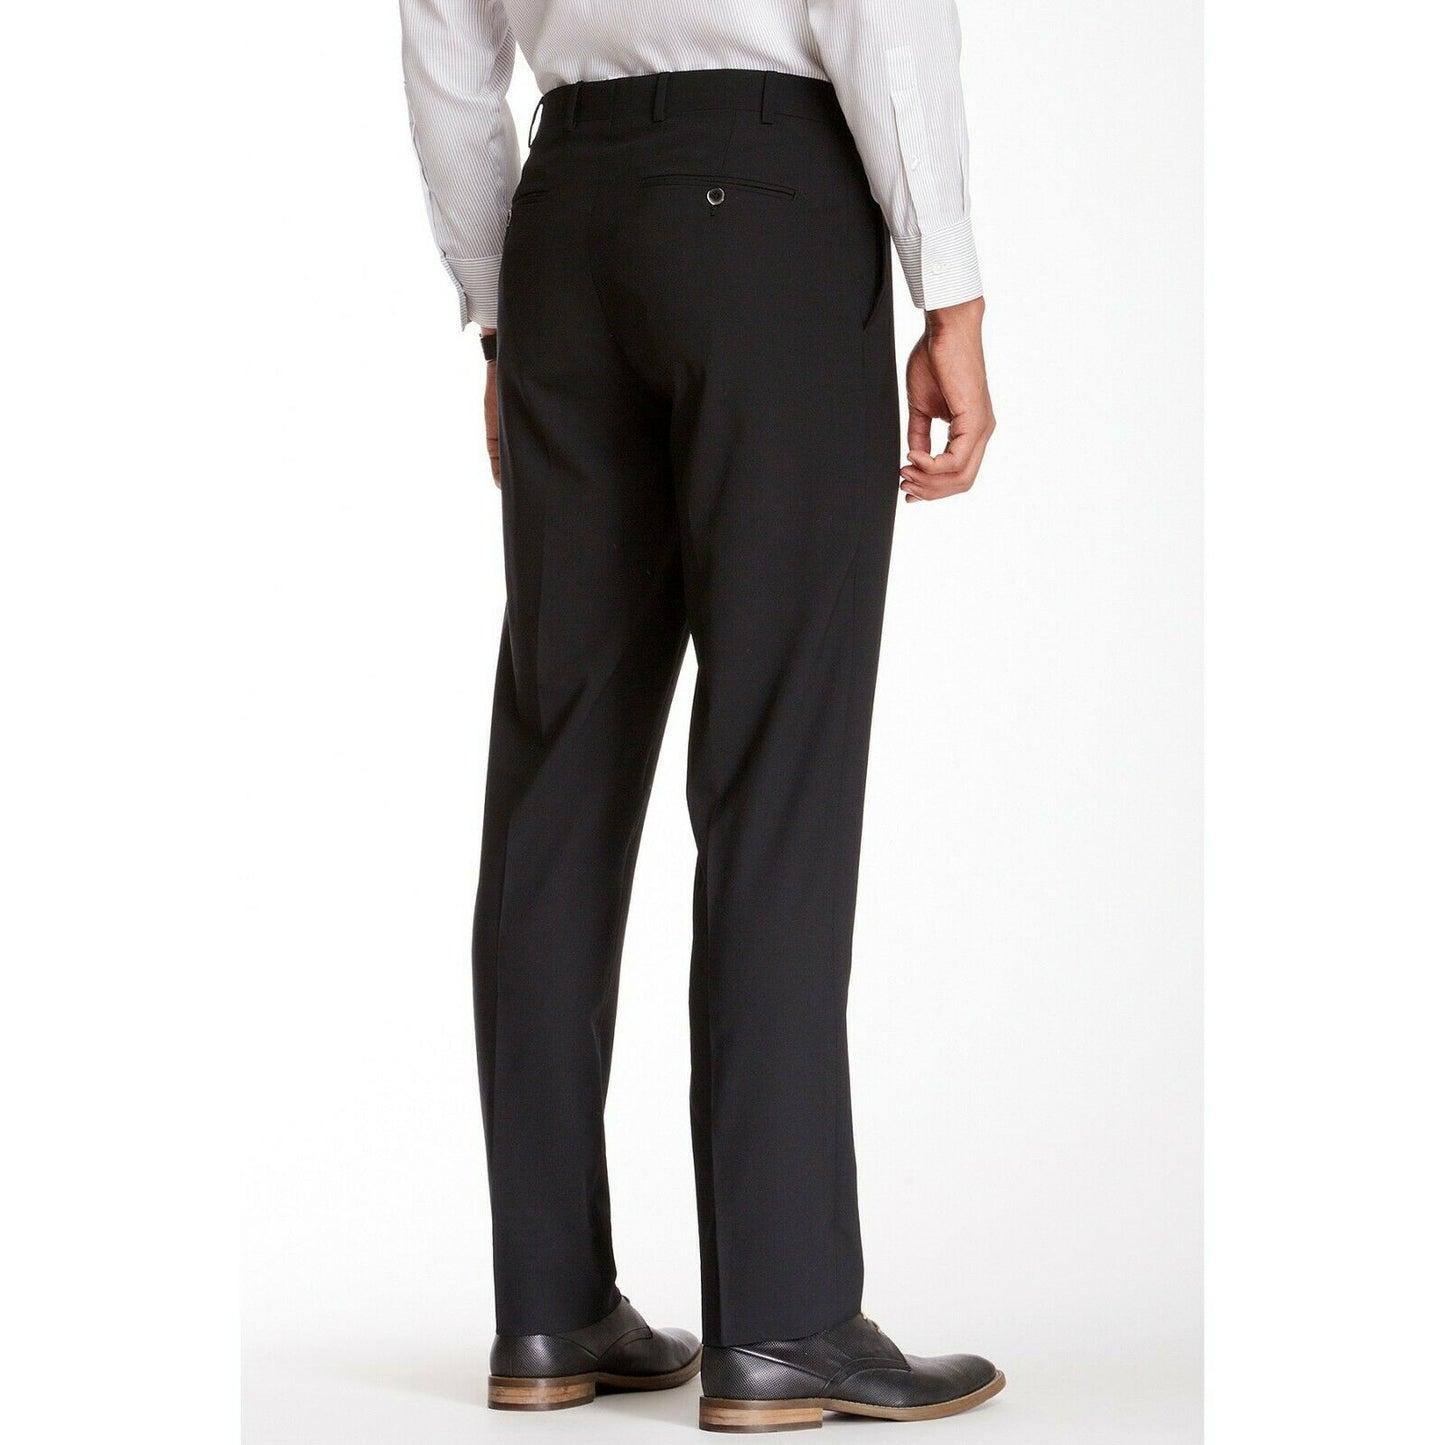 Ike Behar Mens Wool Flat Front Dress Suit Slacks Pants Black 34 NWT